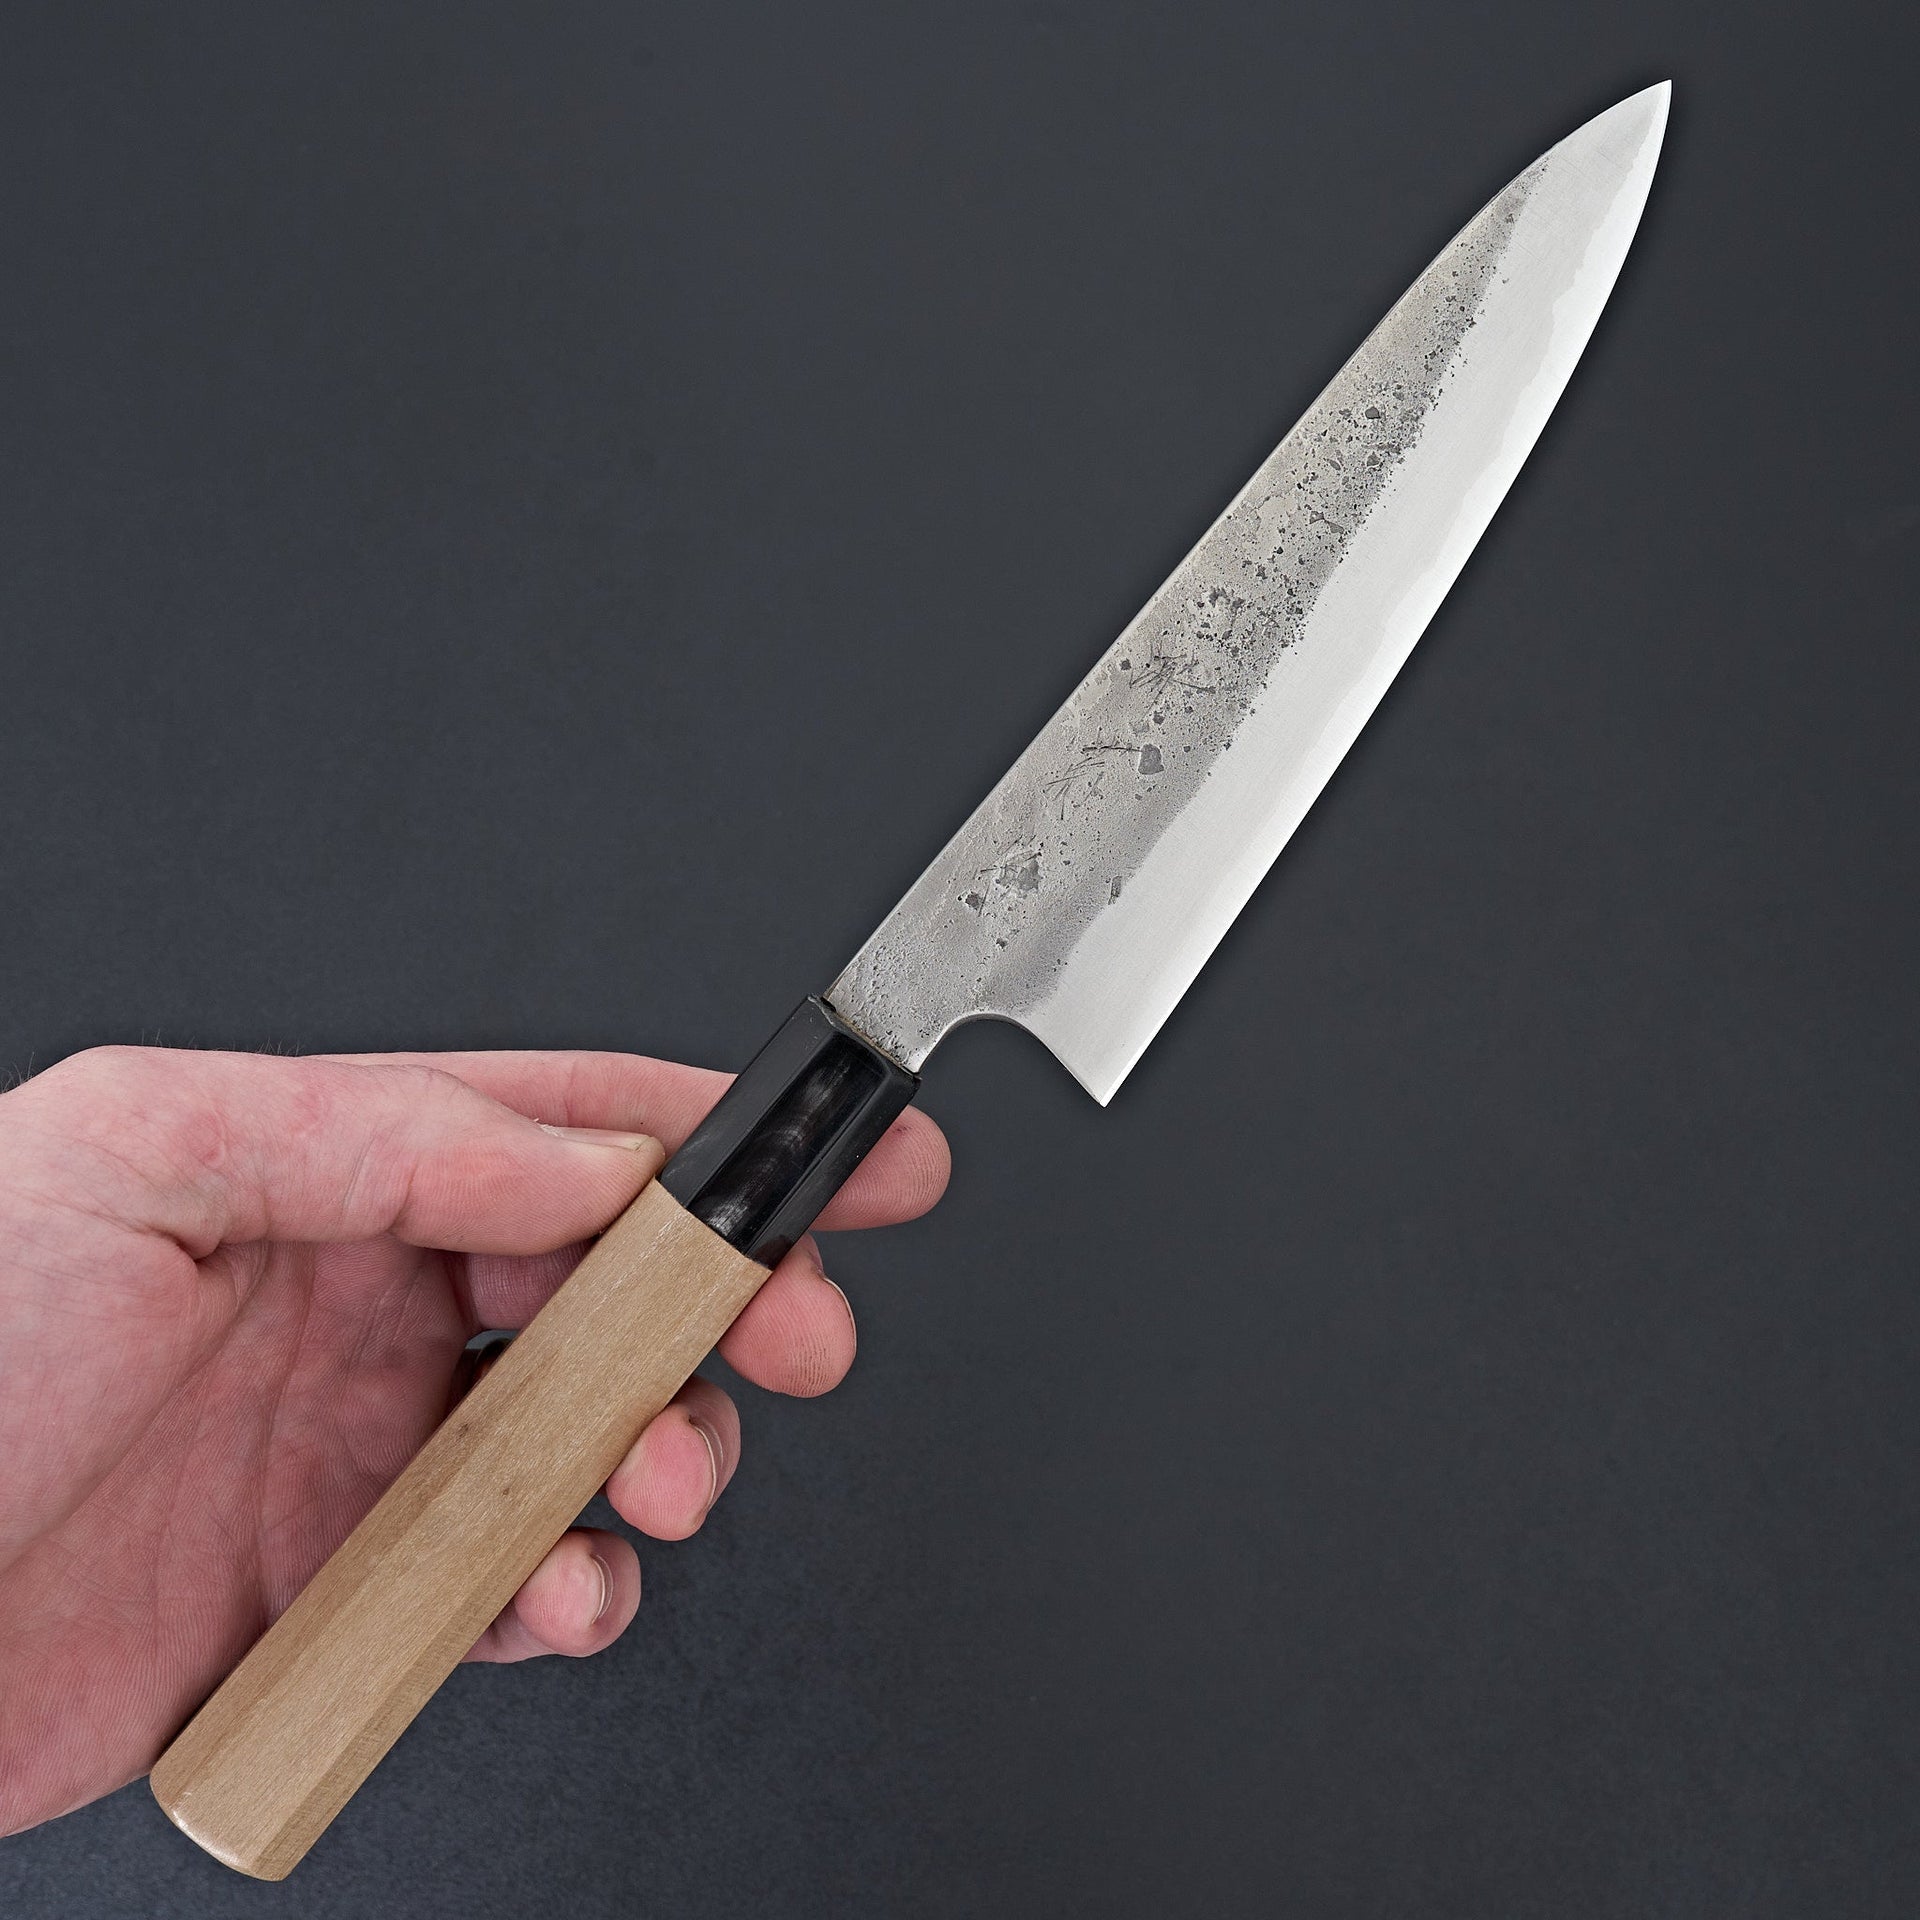 Kikumori Nashiji Blue #2 Petty 150mm-Knife-Sakai Kikumori-Carbon Knife Co